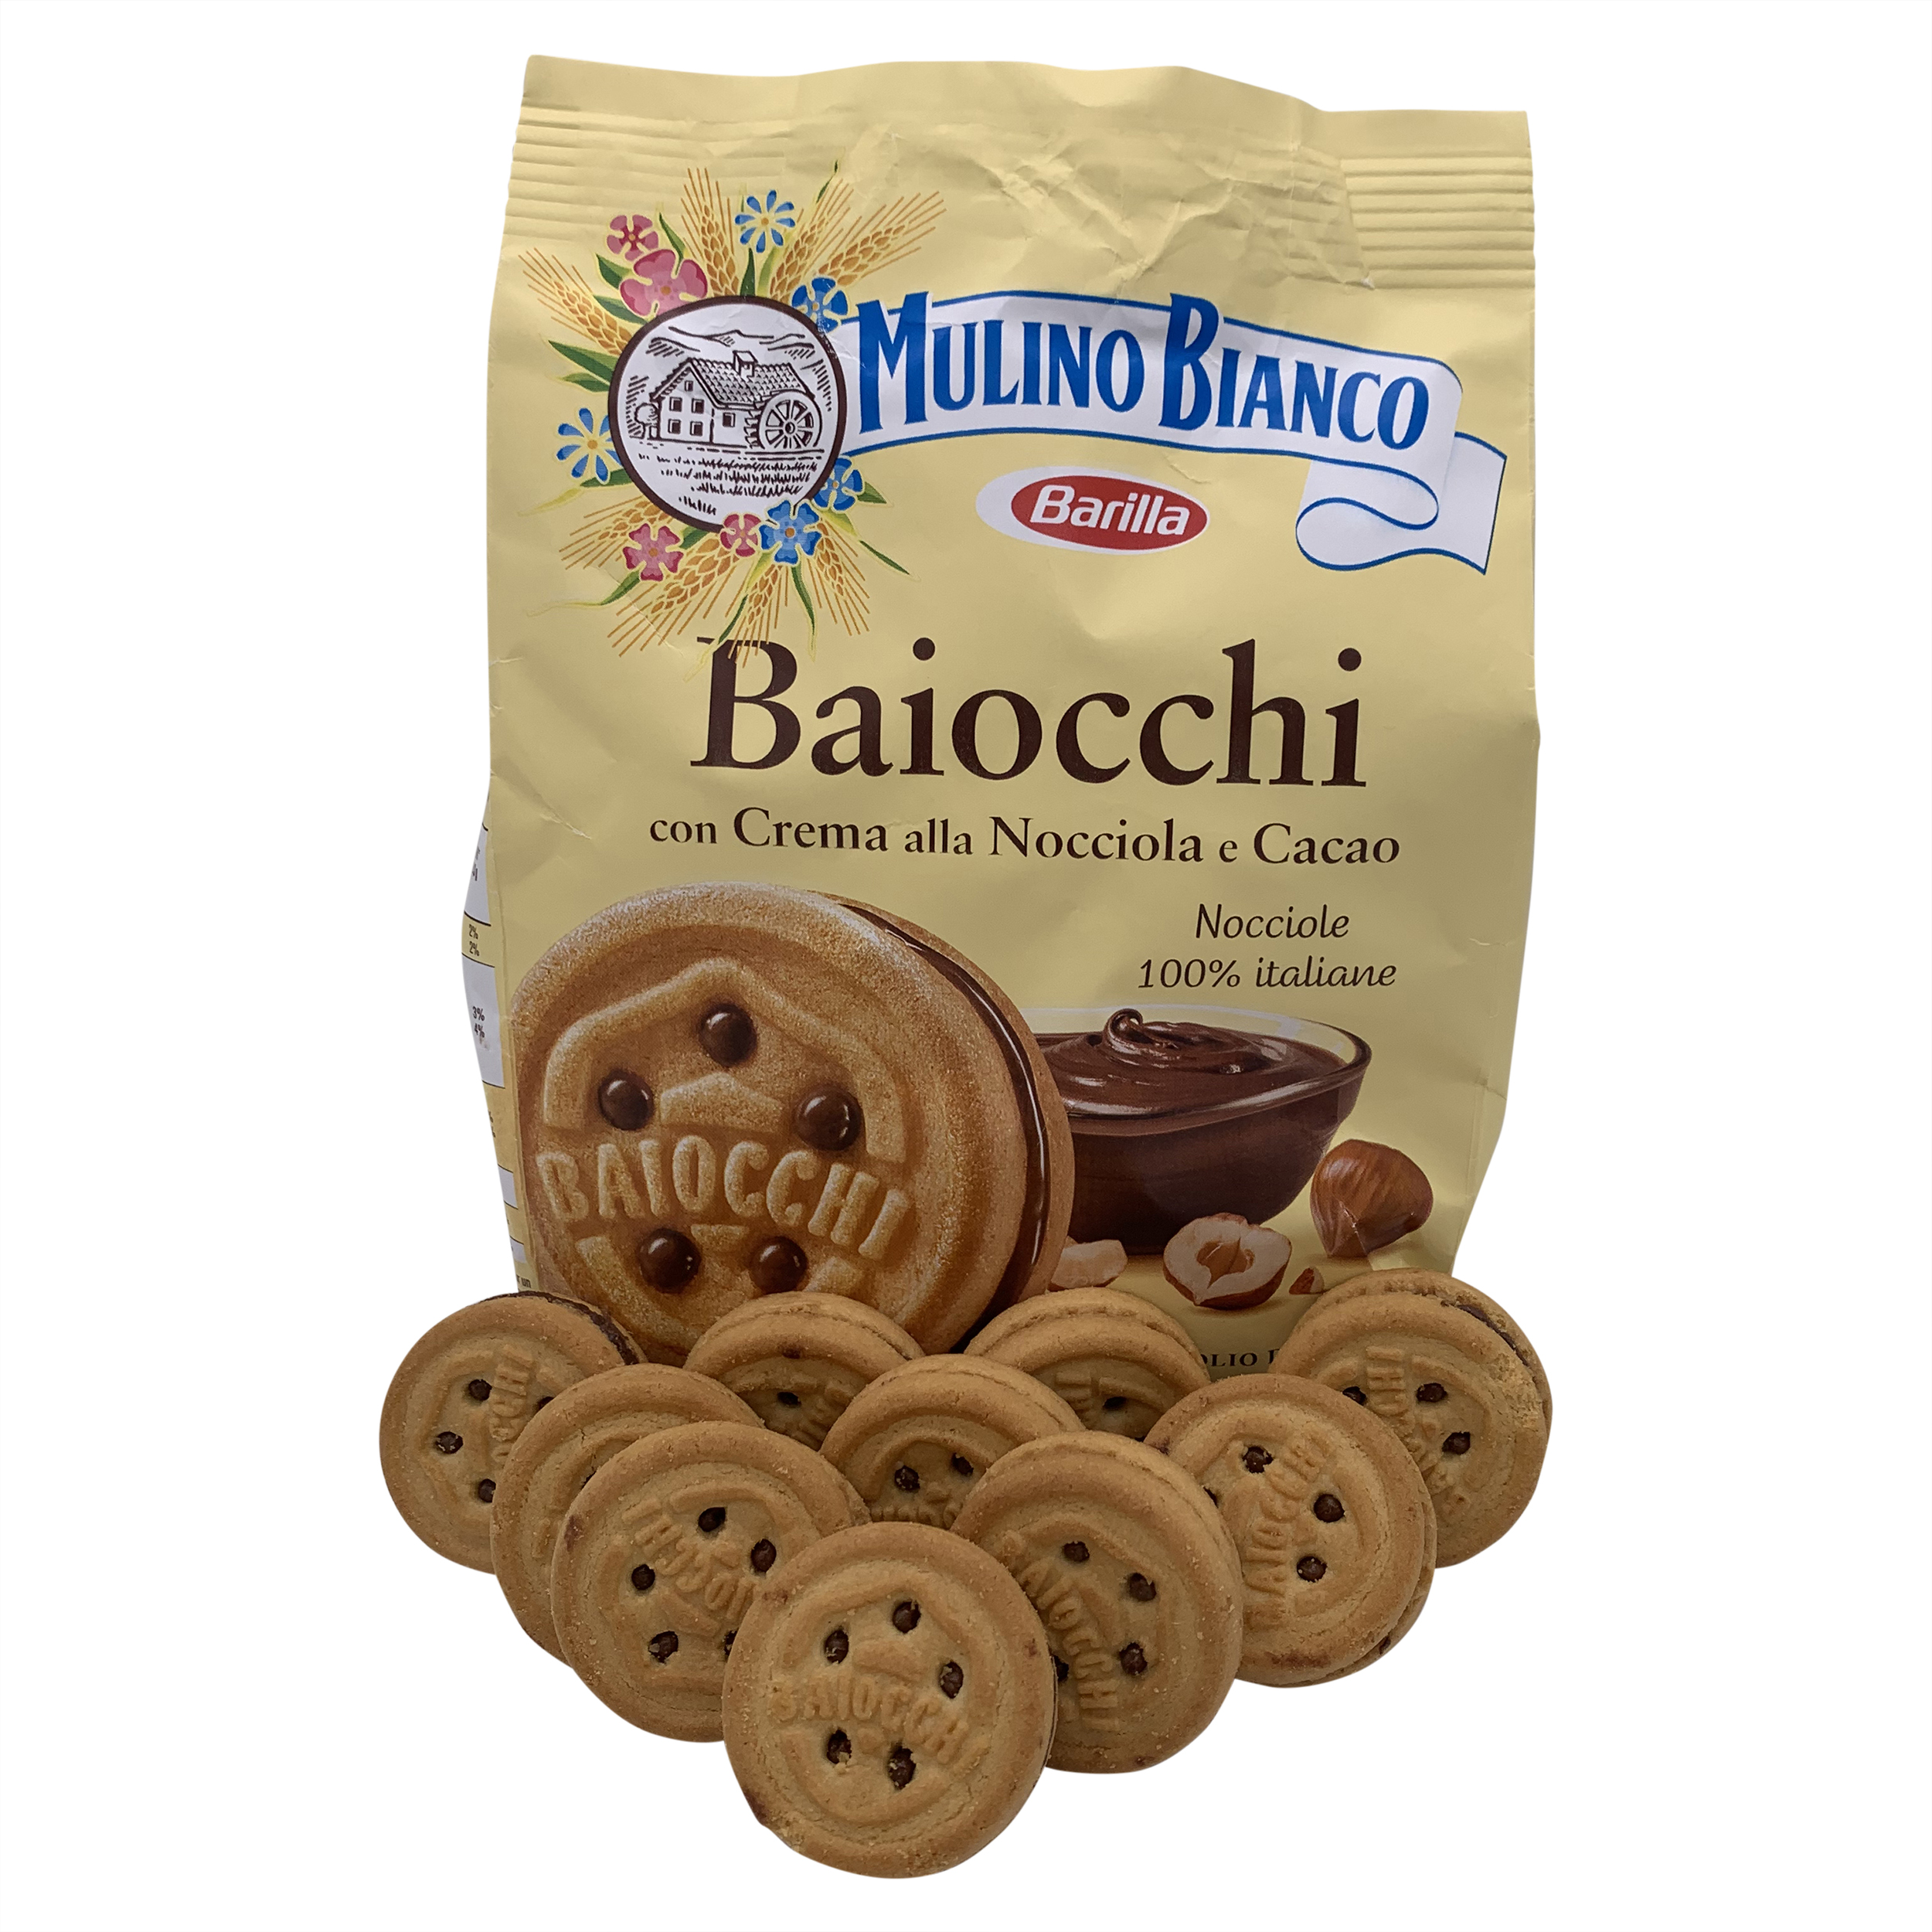 Mulino Bianco, Italian Cookies